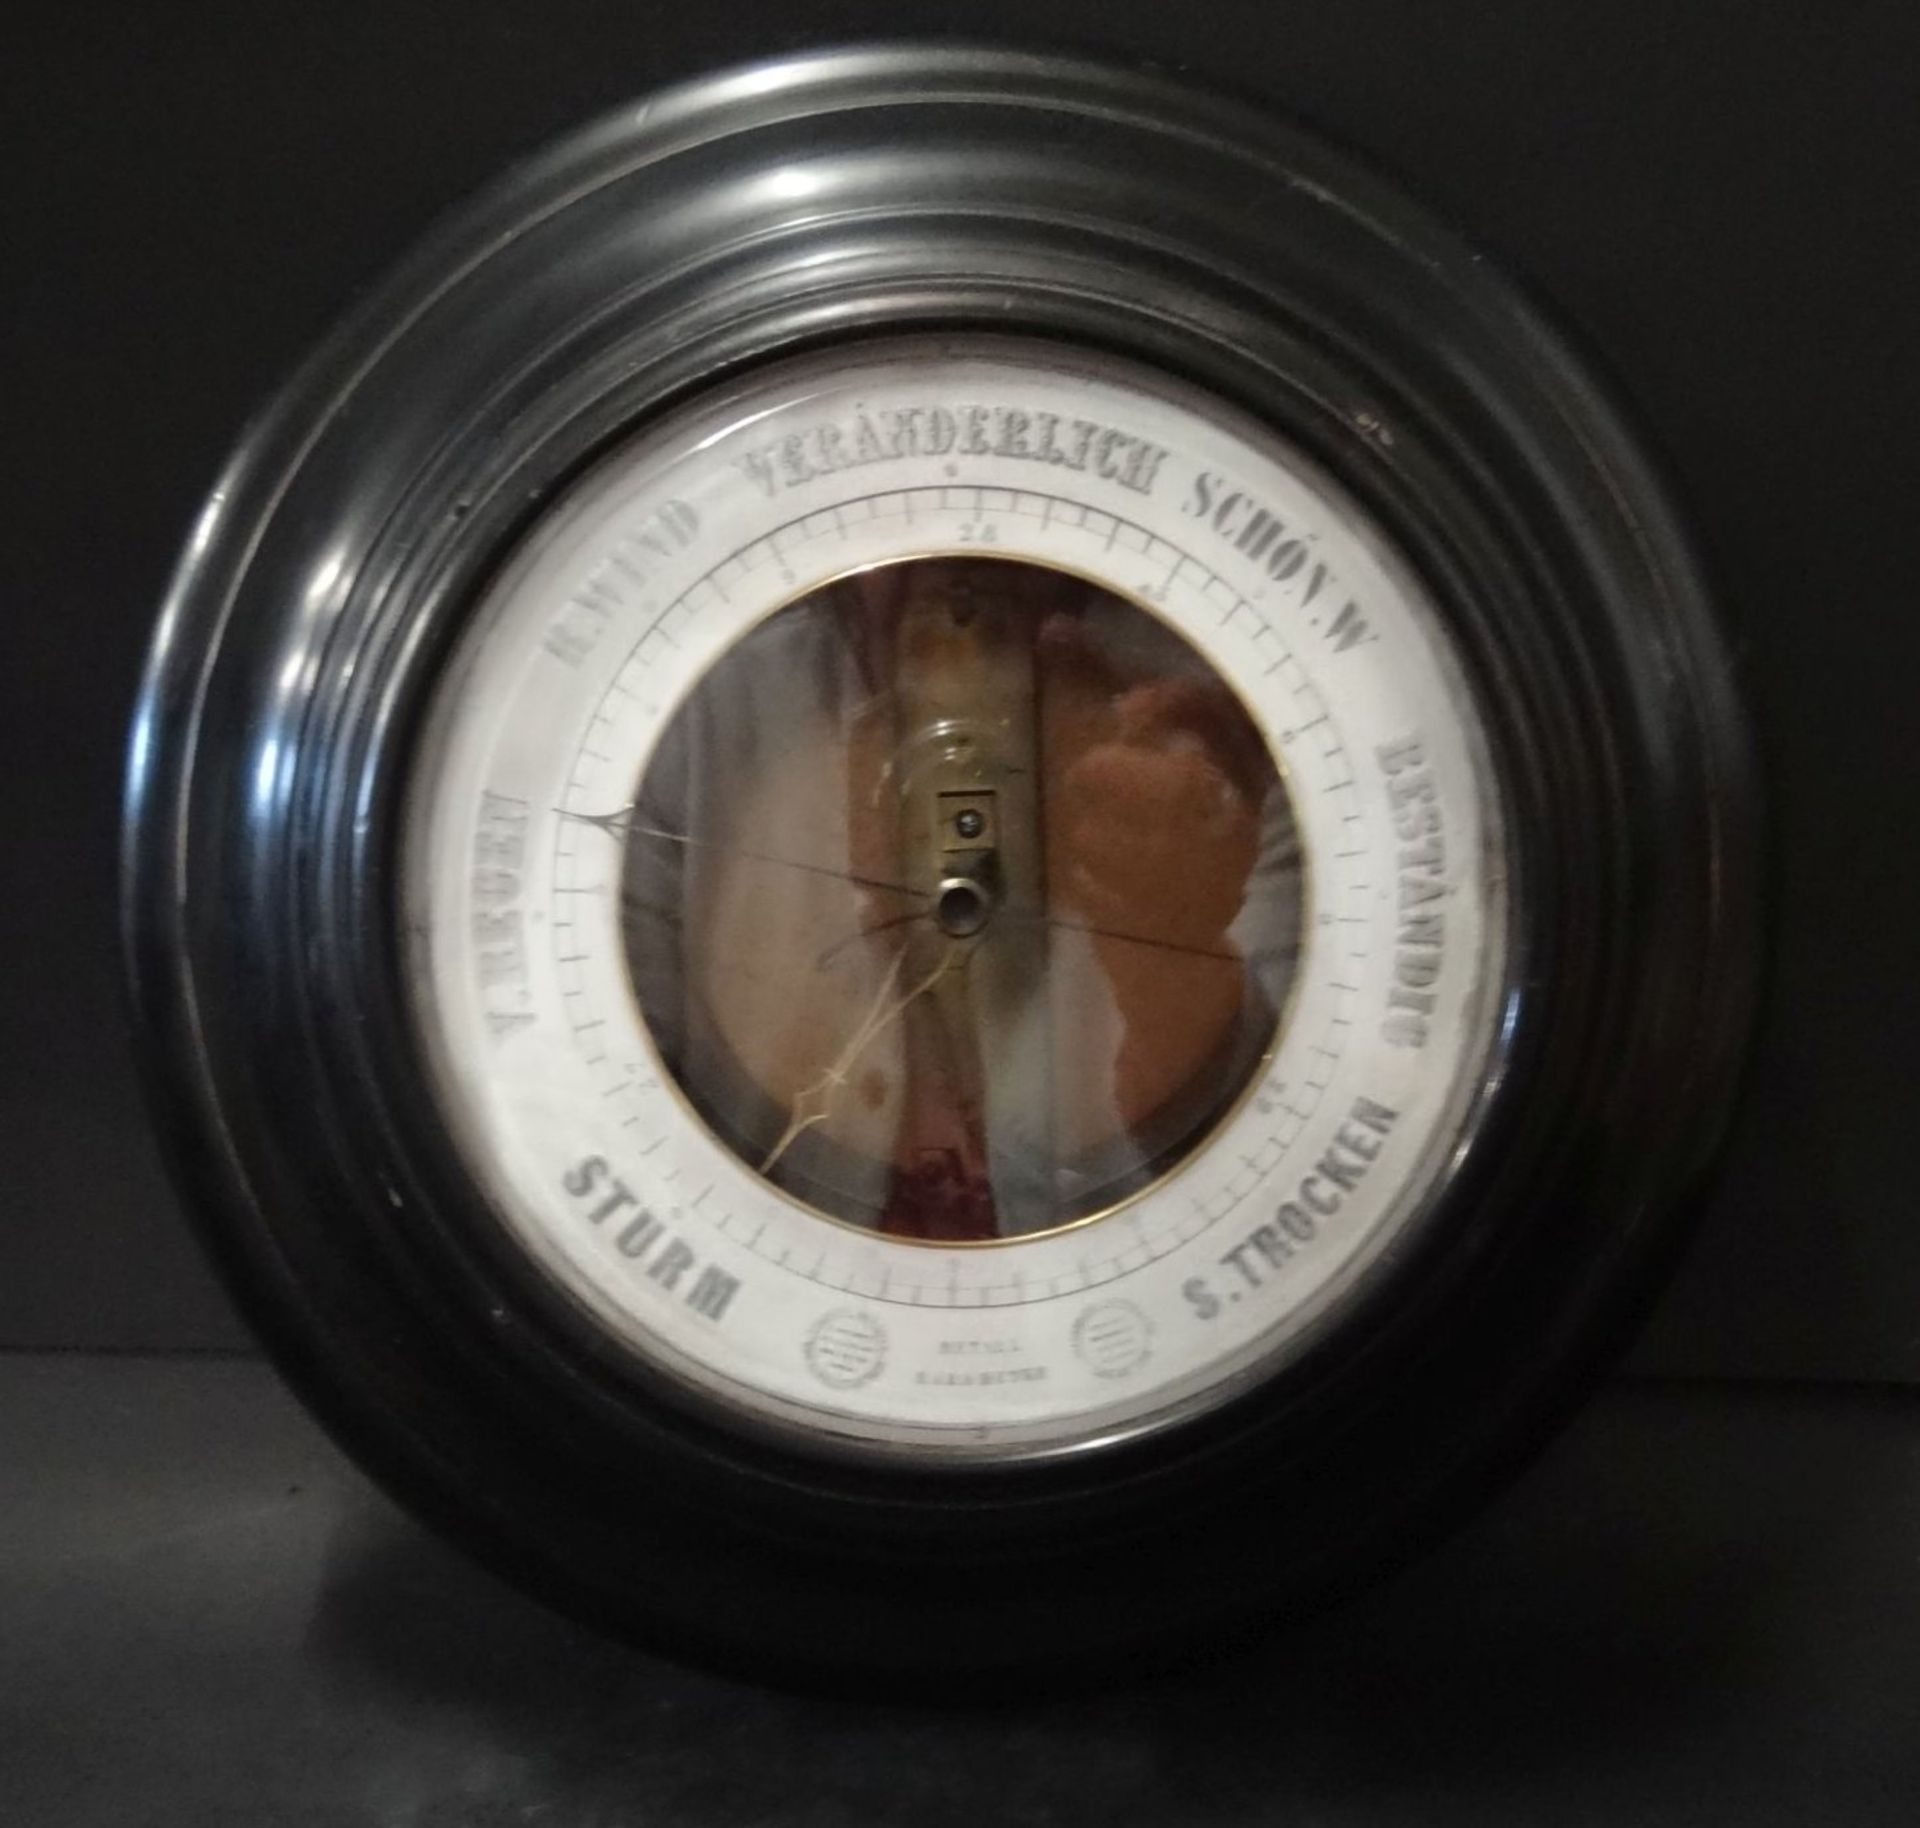 grosses Metall-Barometer in runden Holzgehäuse um 1850, D-33 c"""" - Bild 2 aus 6